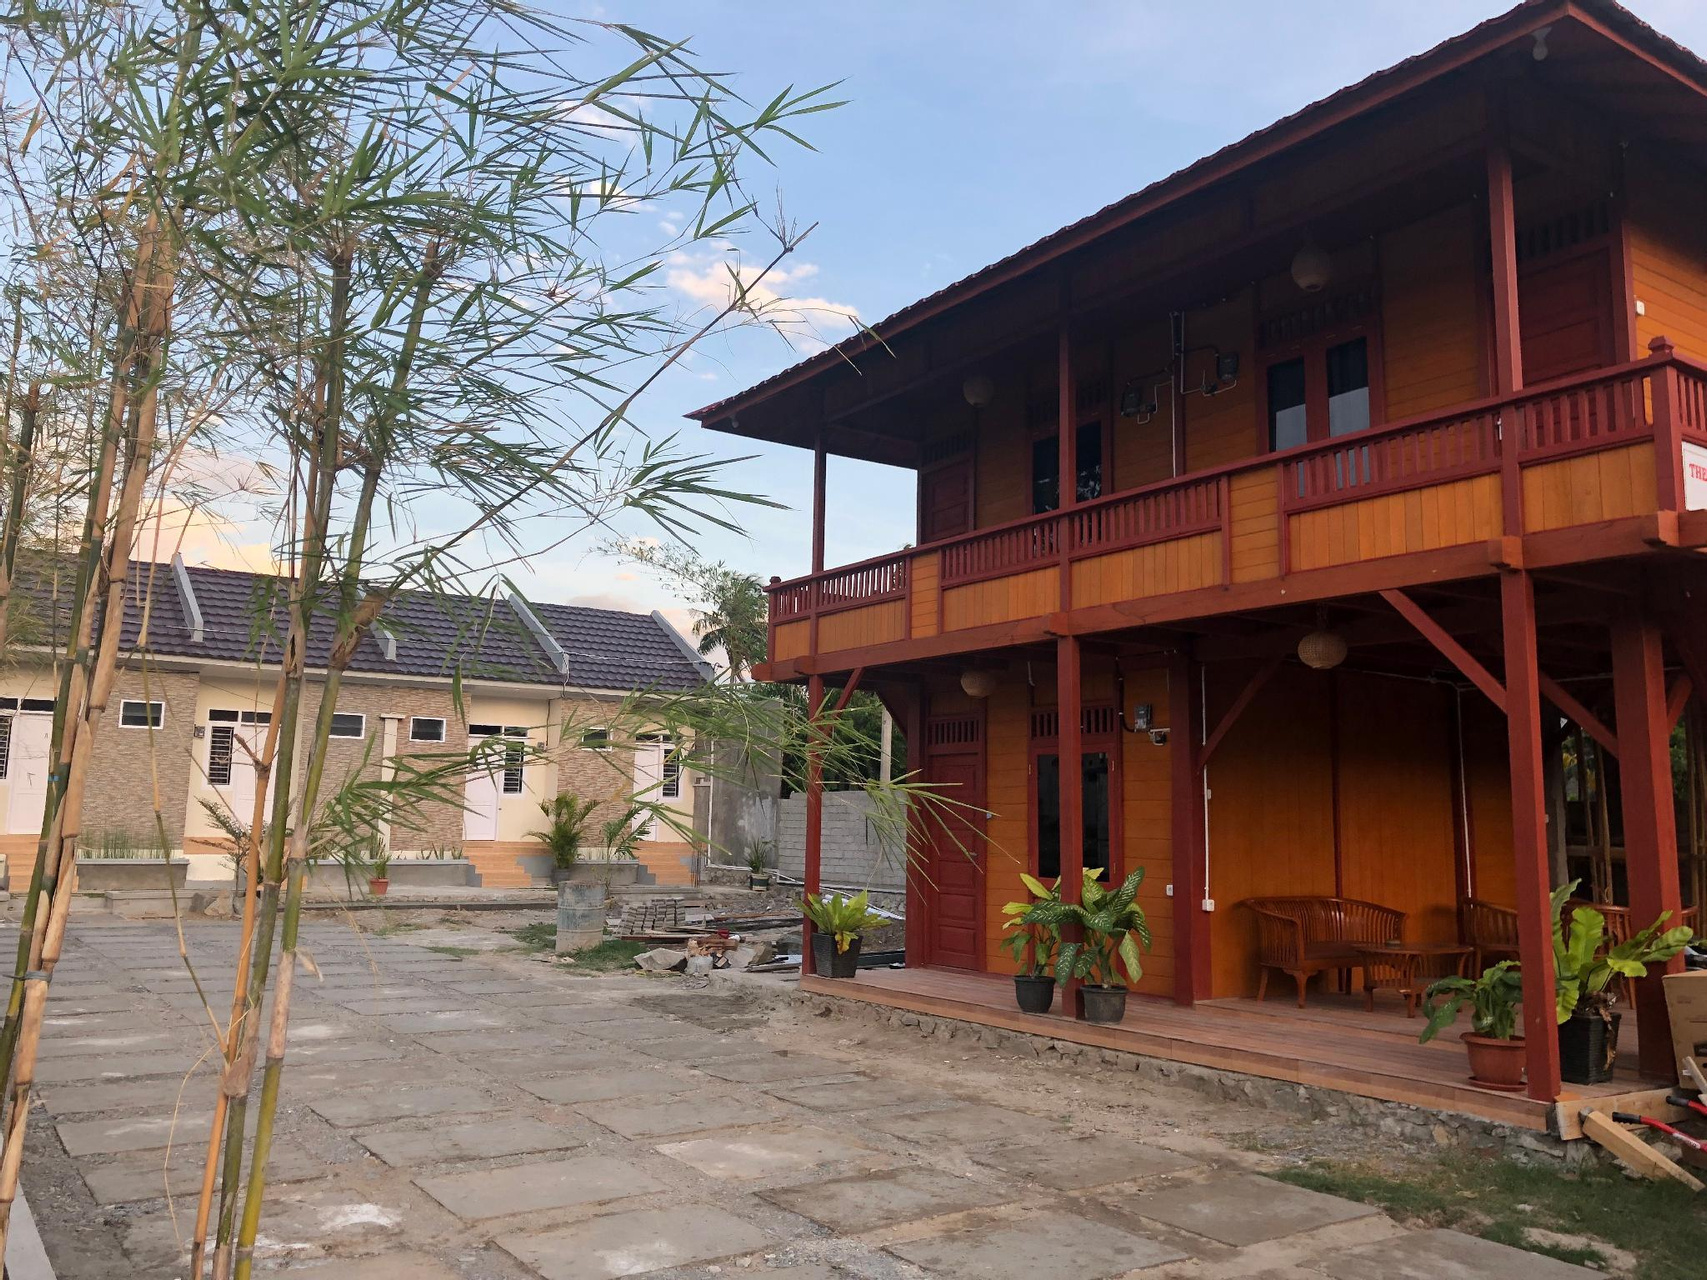 Exterior & Views, Bamboo House III, Palu